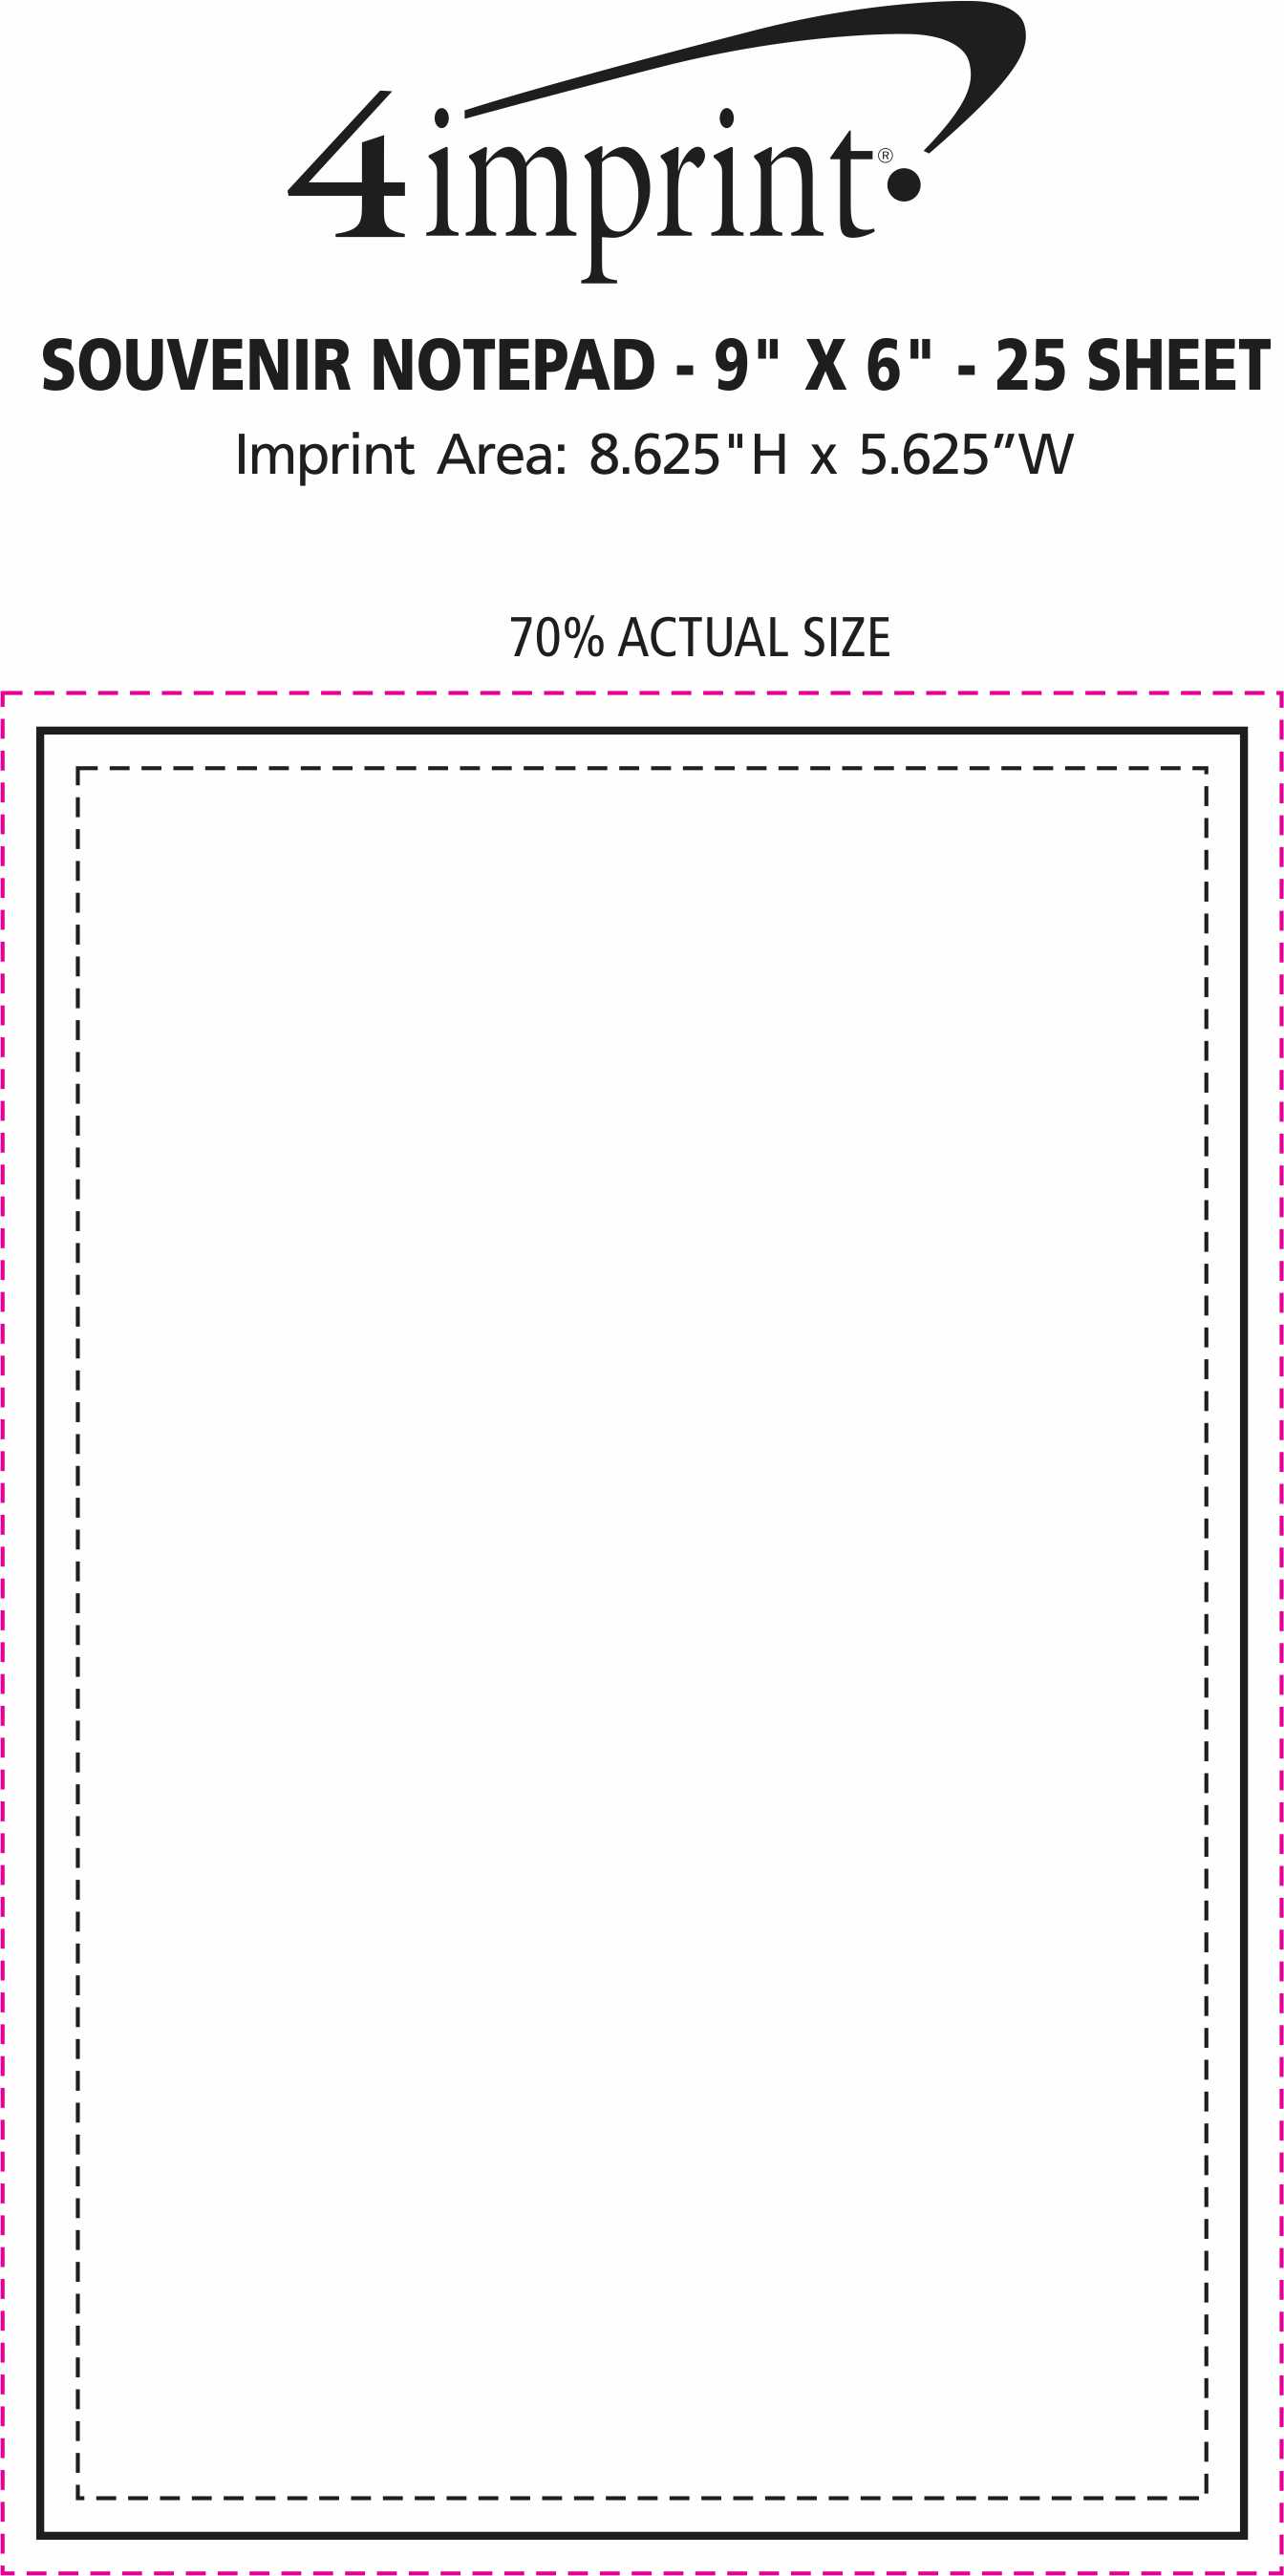 Imprint Area of Souvenir Notepad - 9" x 6" - 25 Sheet